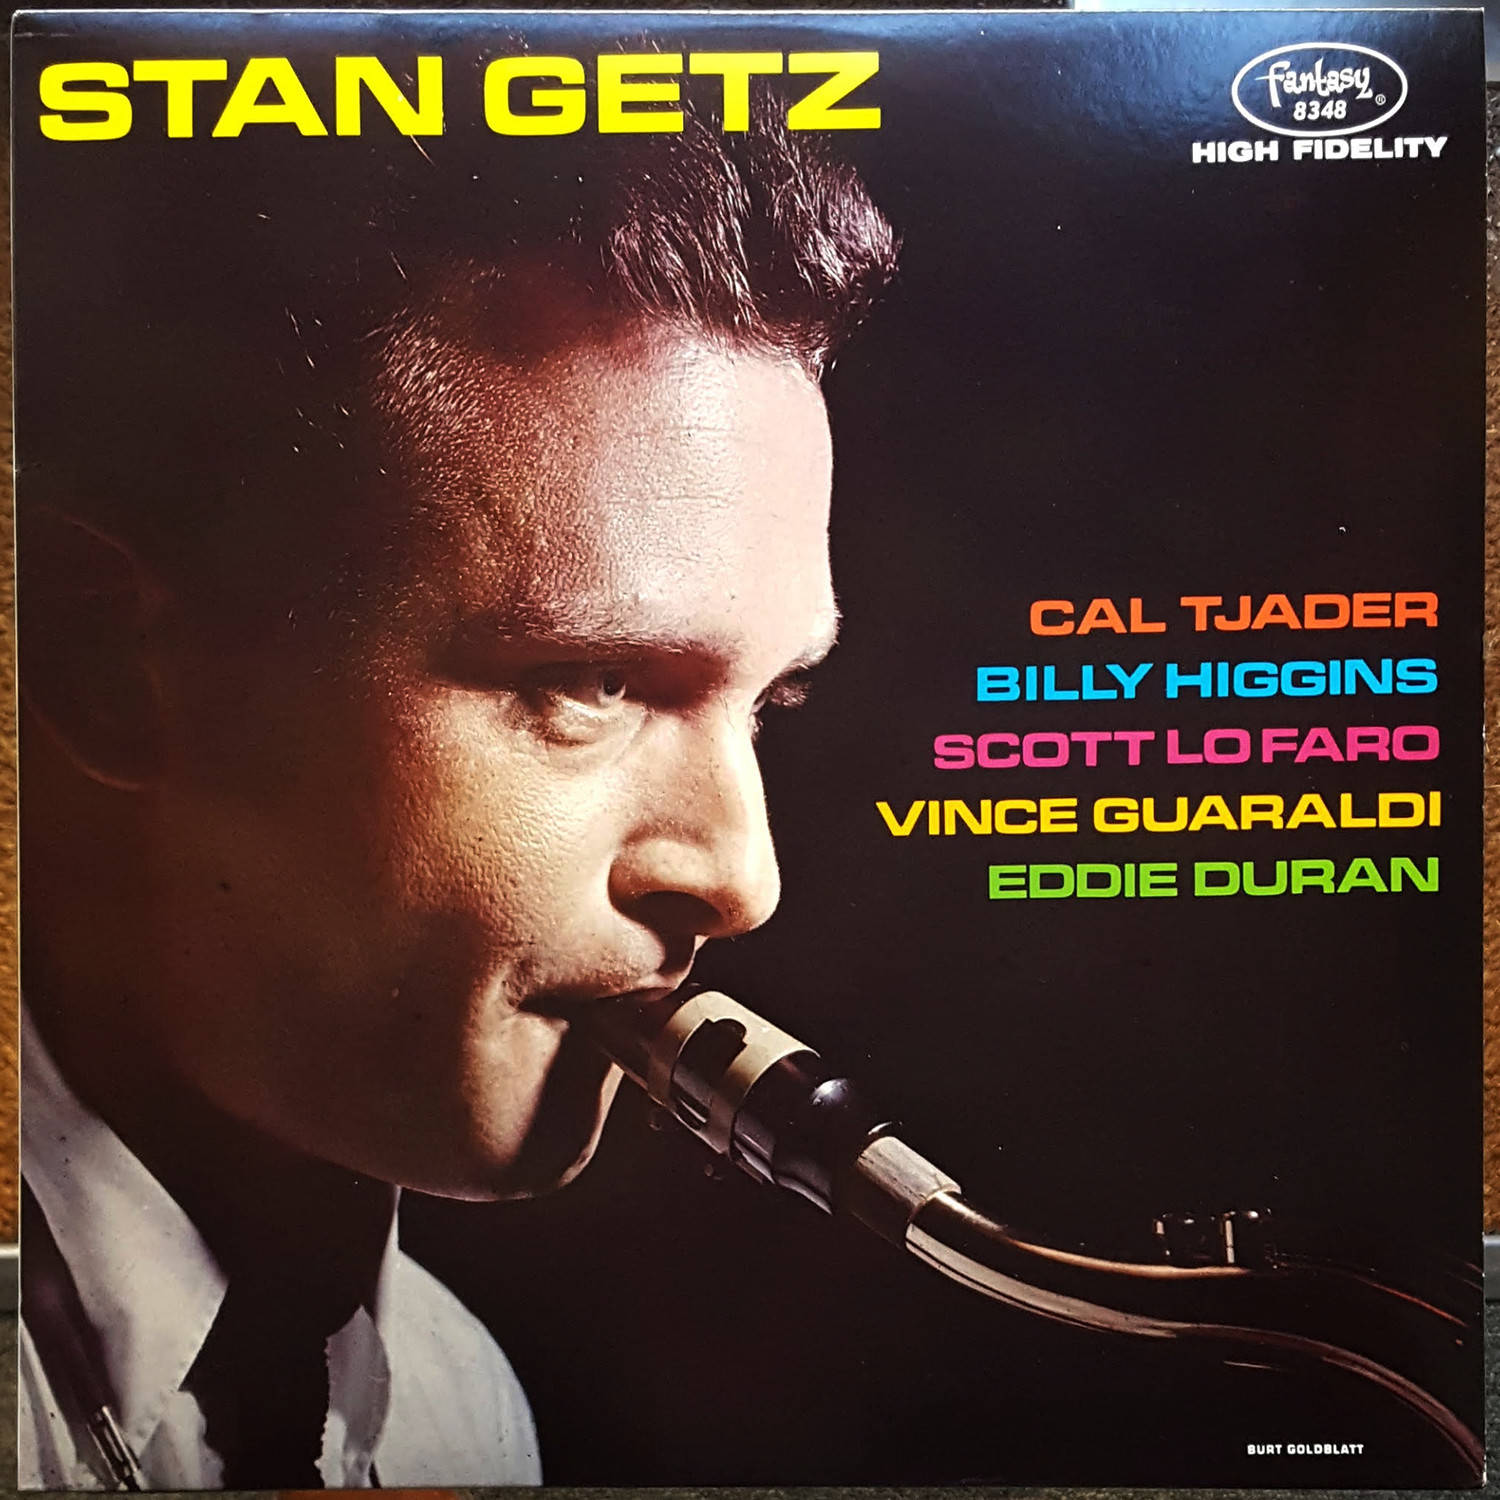 Stan Getz 1990 Cd Album Cover Wallpaper